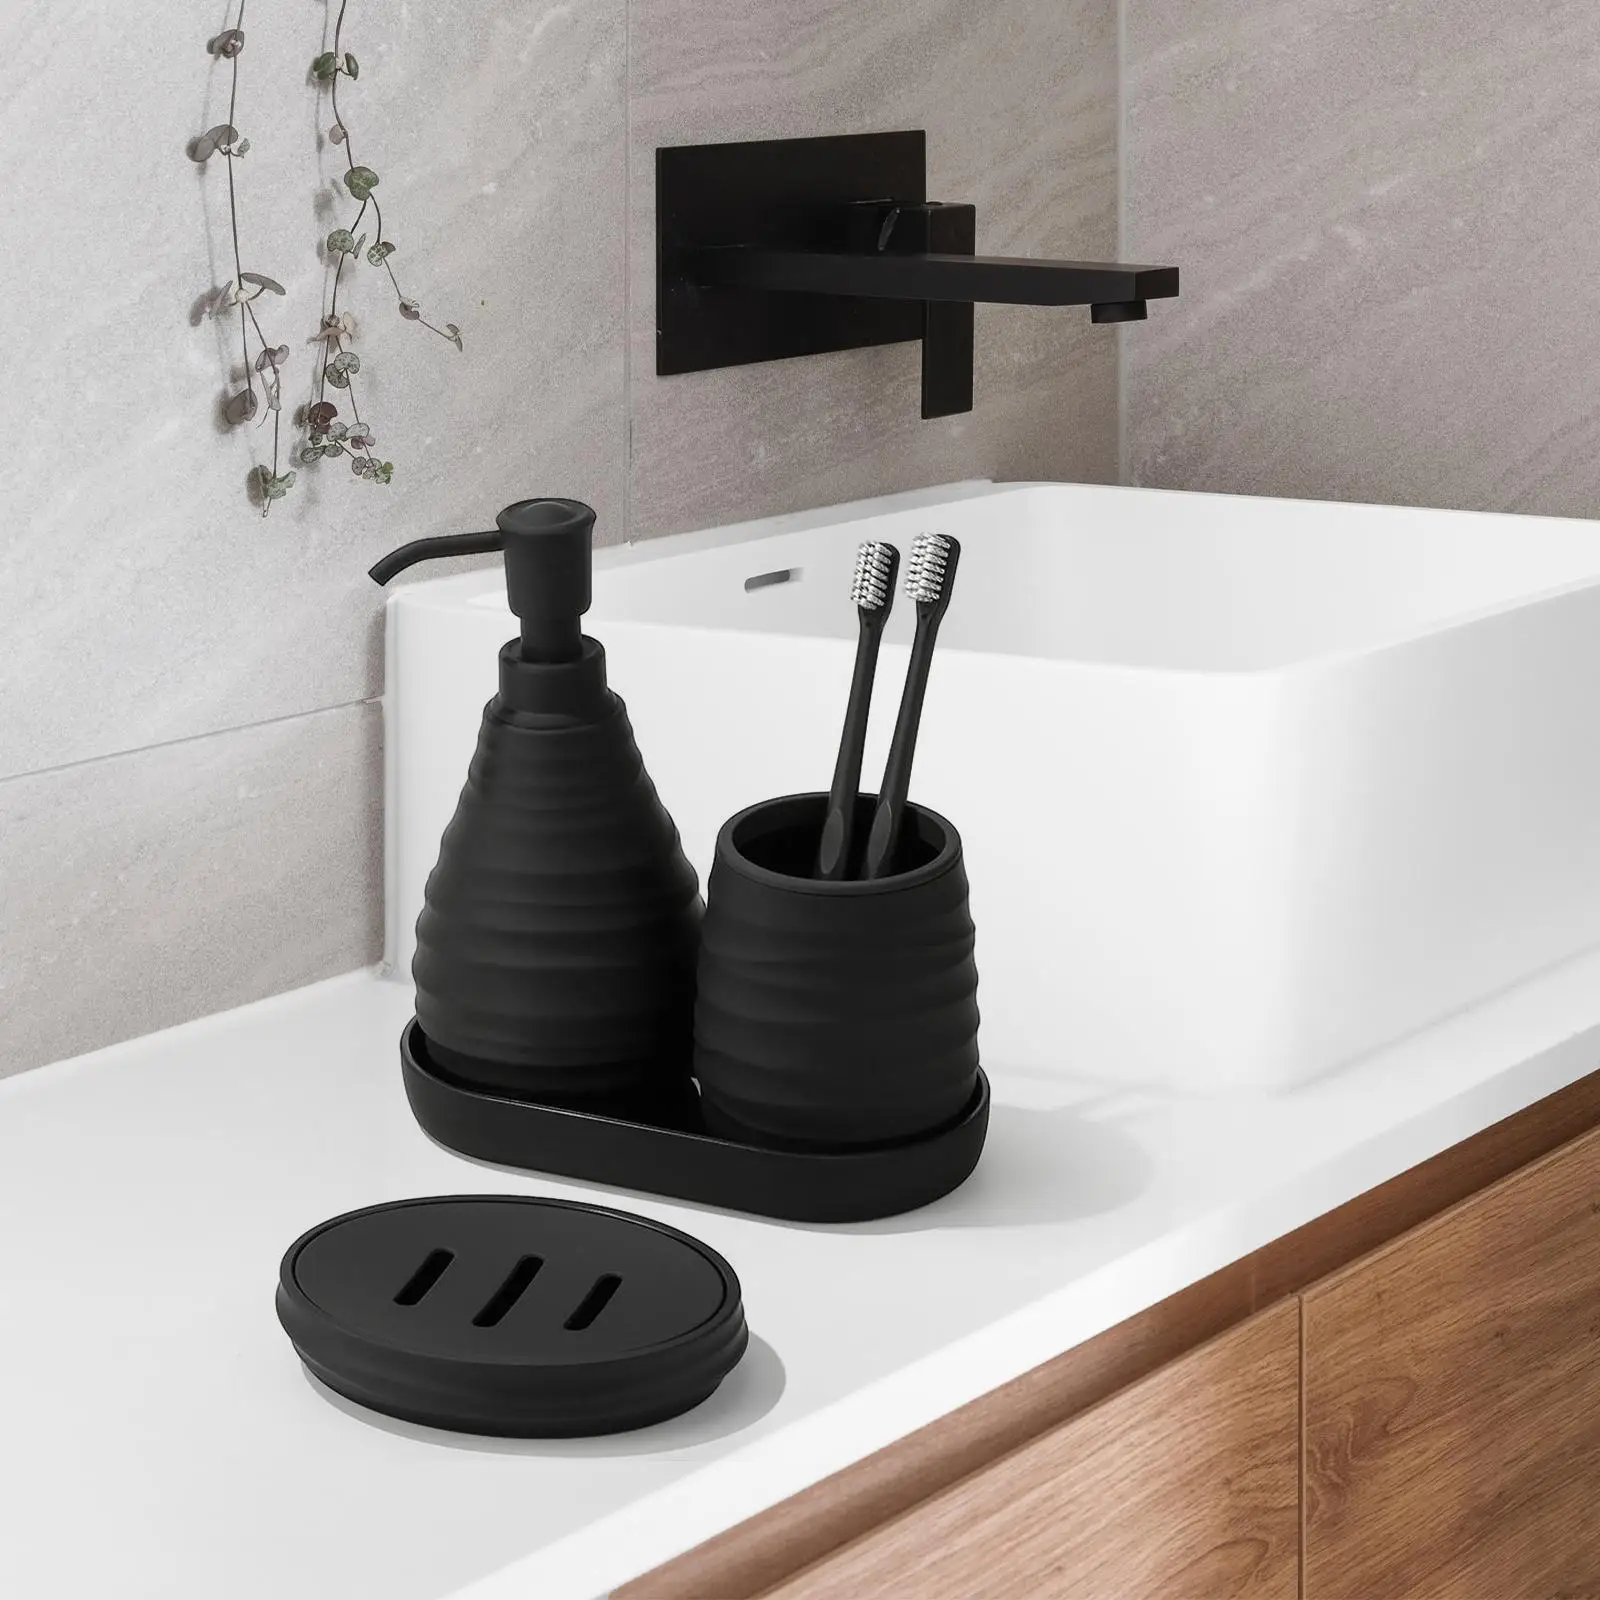 4Pcs Bathroom Accessories Set for Homes Hotels Matte Black Countertop Decoration Housewarming Gift Stylish Designs Bath Set